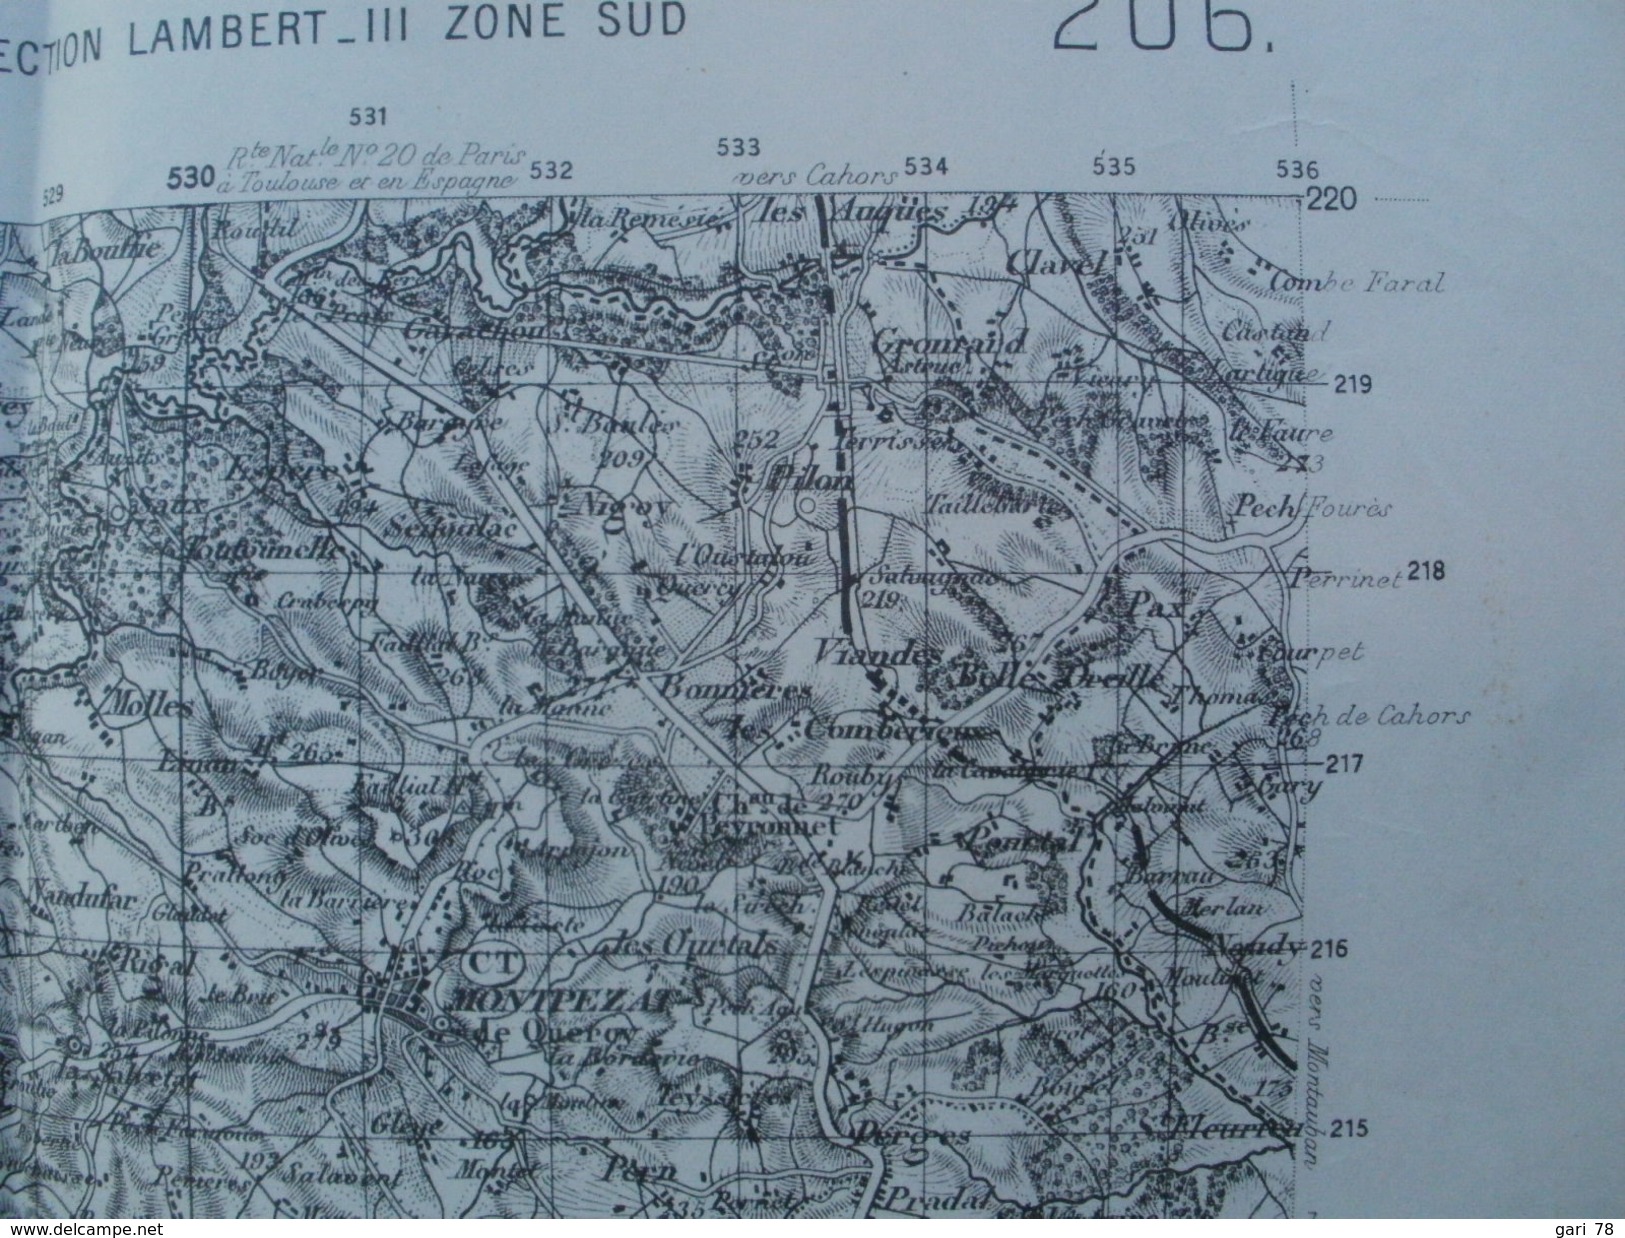 Carte Topographique D'Etat Major De CAHORS TYPE 1889 CARROYAGE KILOMETRIQUE - Topographische Karten